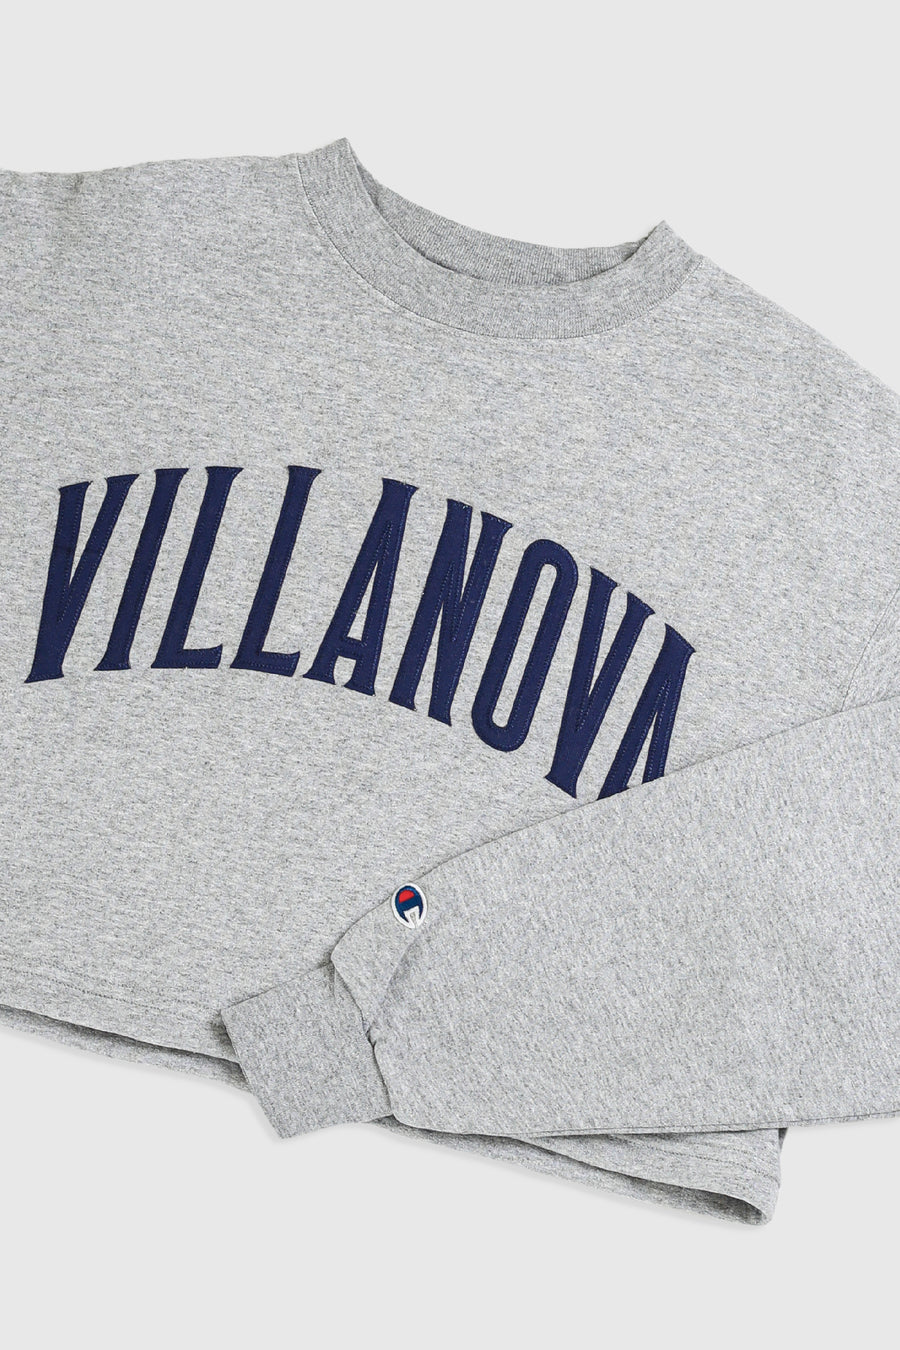 Rework Villanova Crop Sweatshirt - L